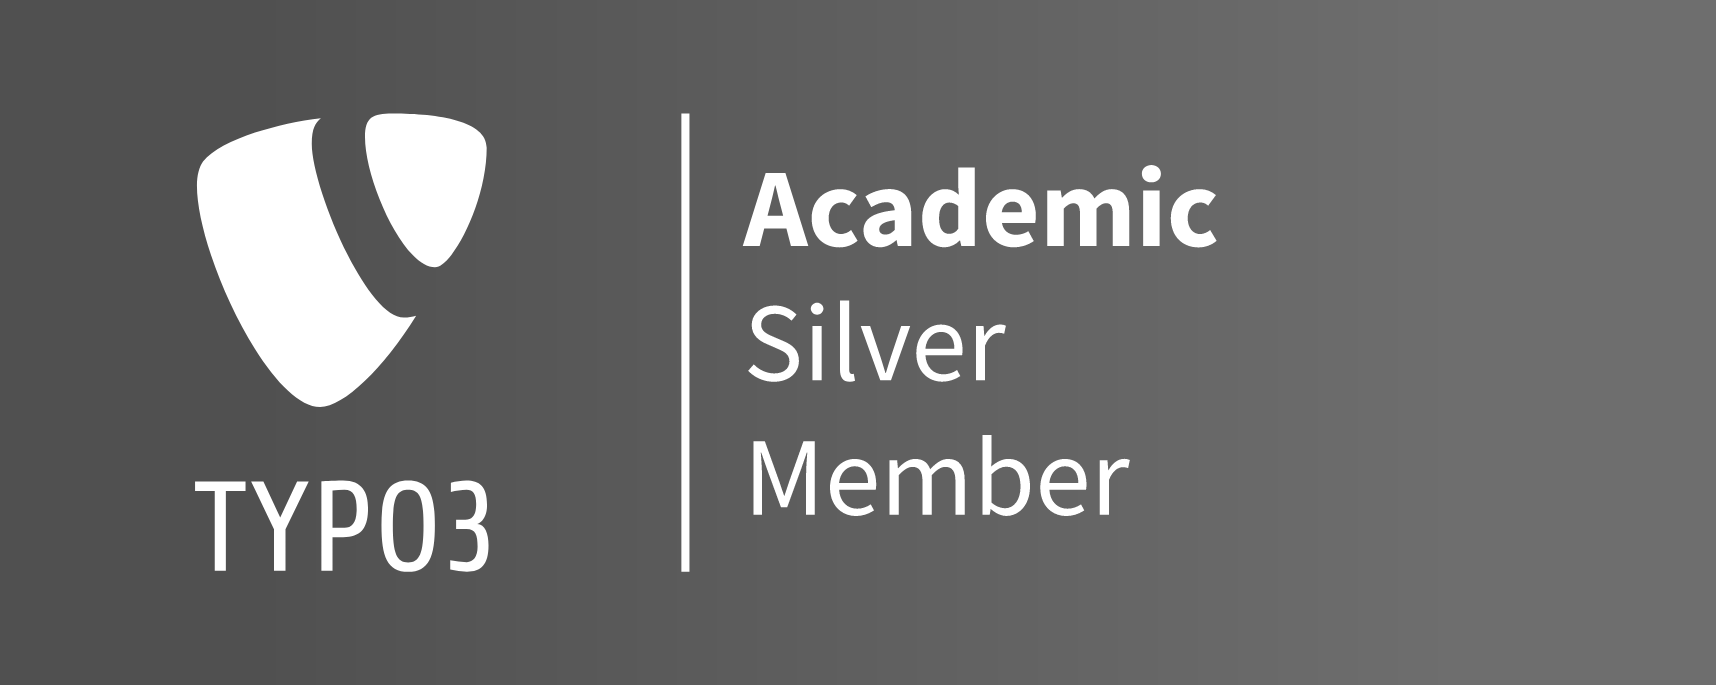 Logo TYPO3 Academic Silver Member